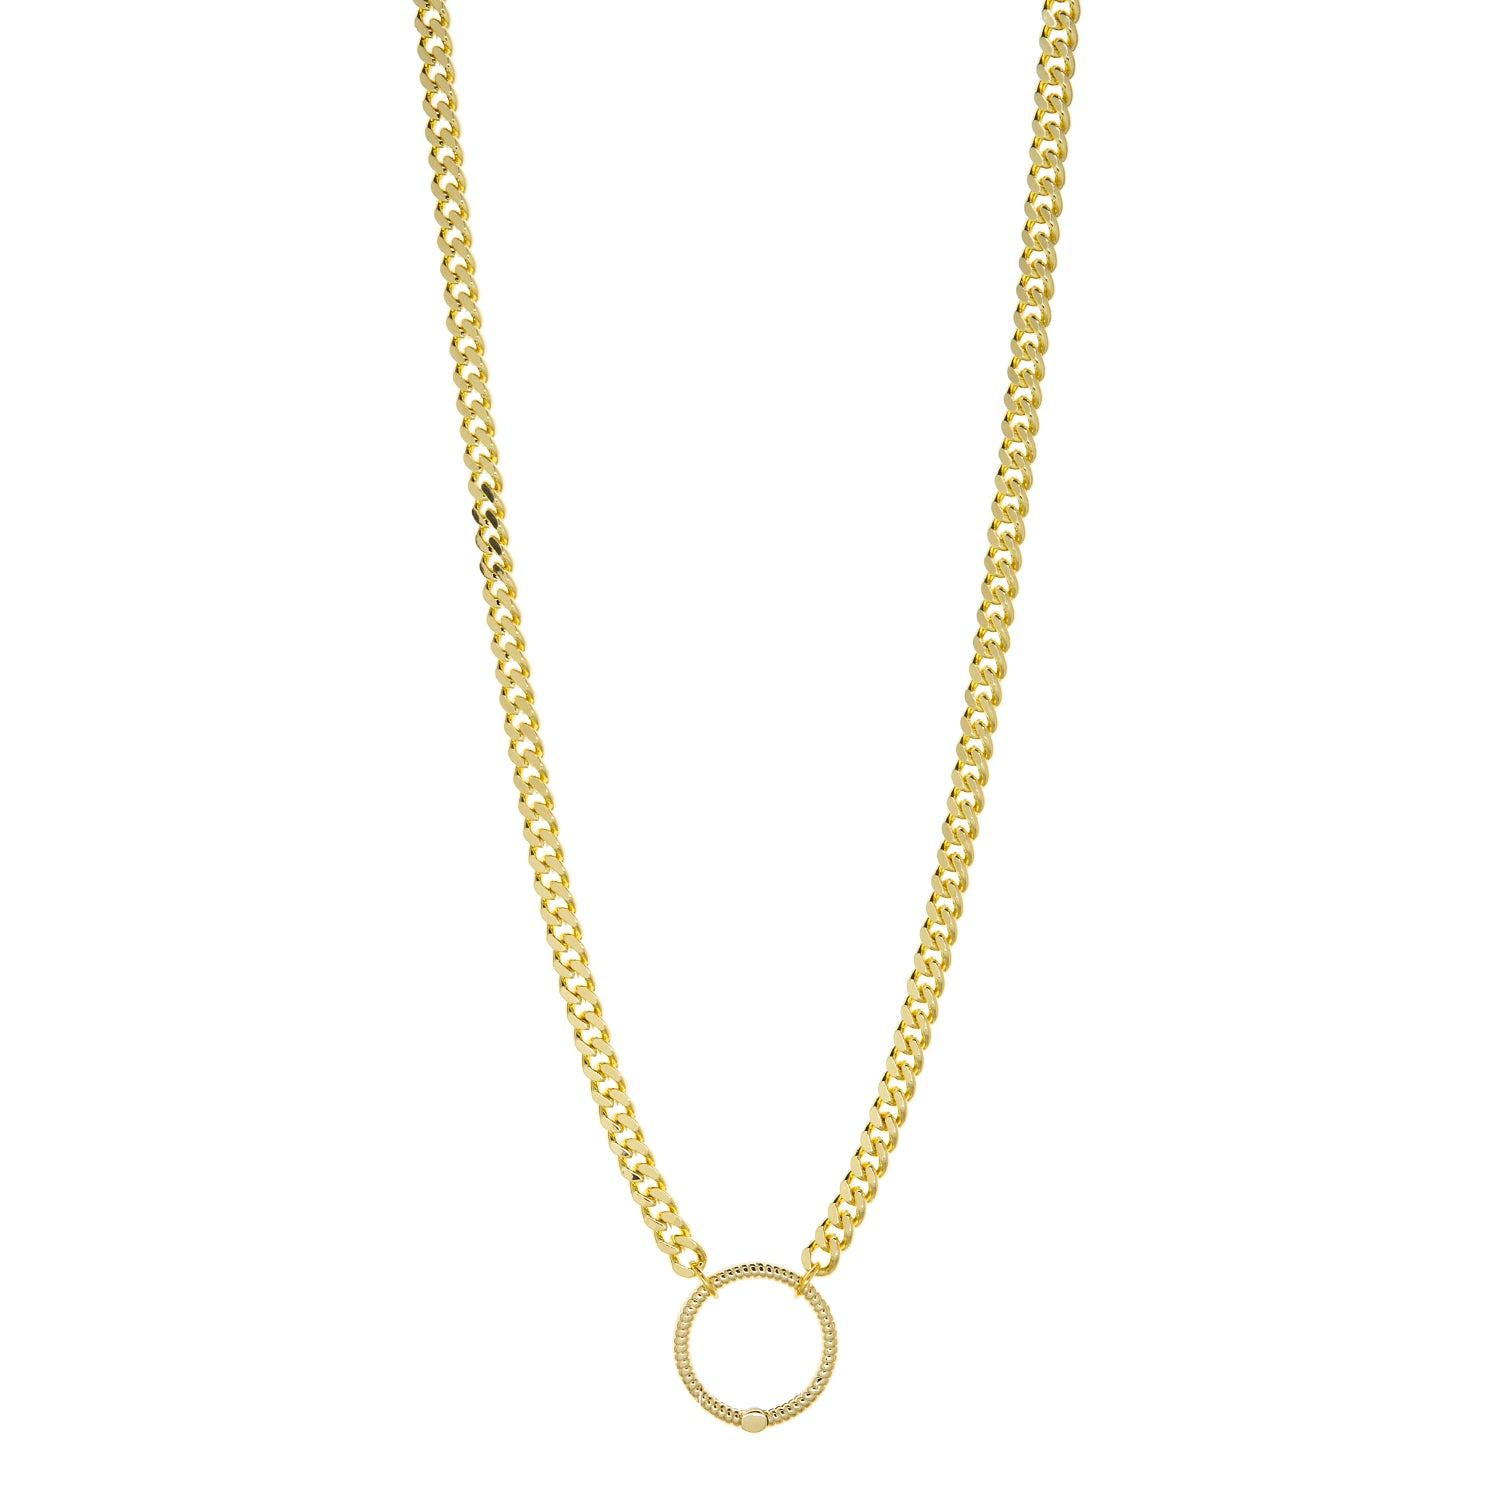 brass hinge-circle pendant necklace